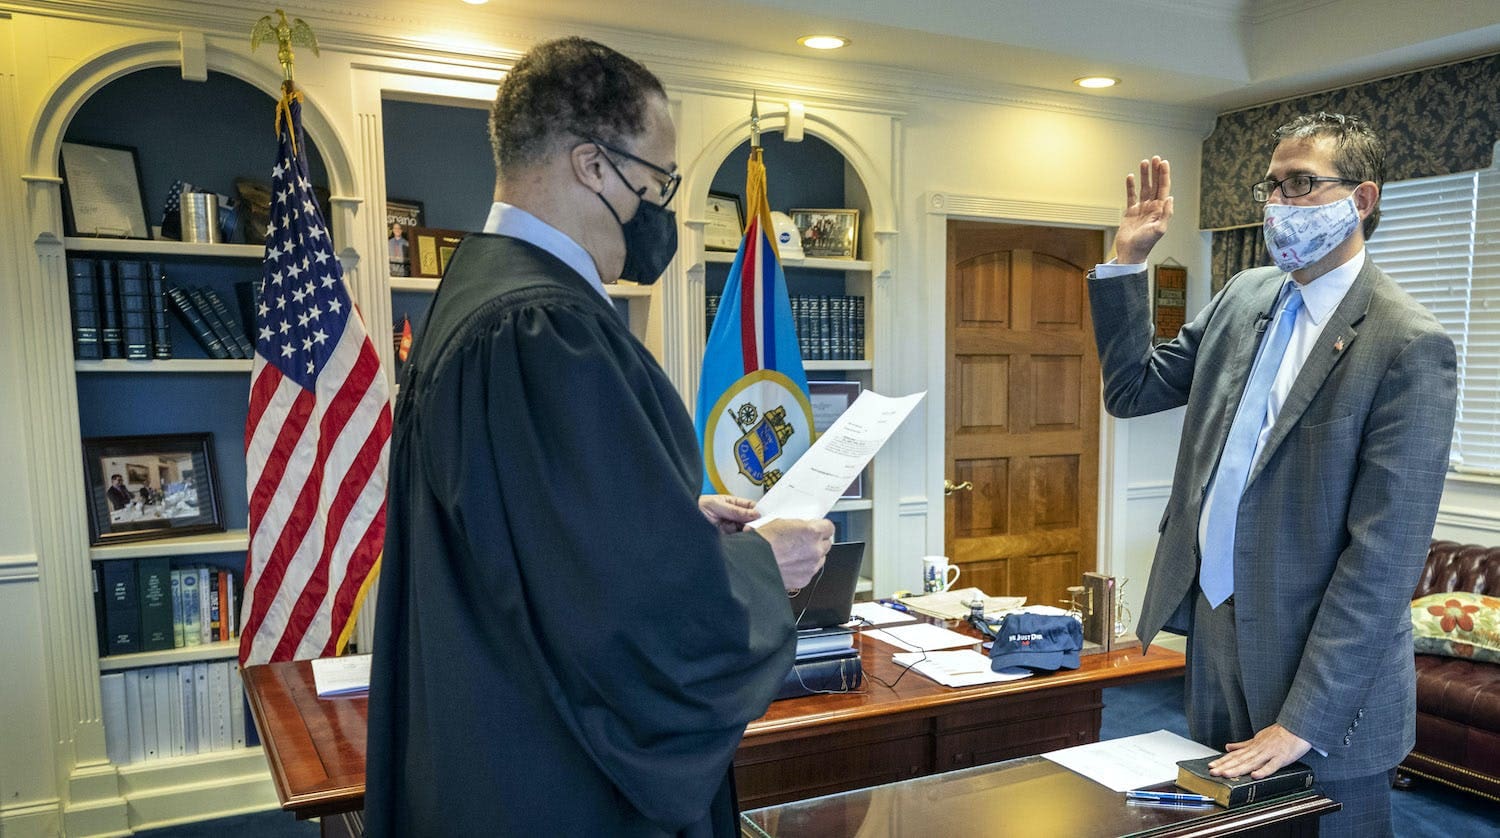 Matt Meyer being sworn in